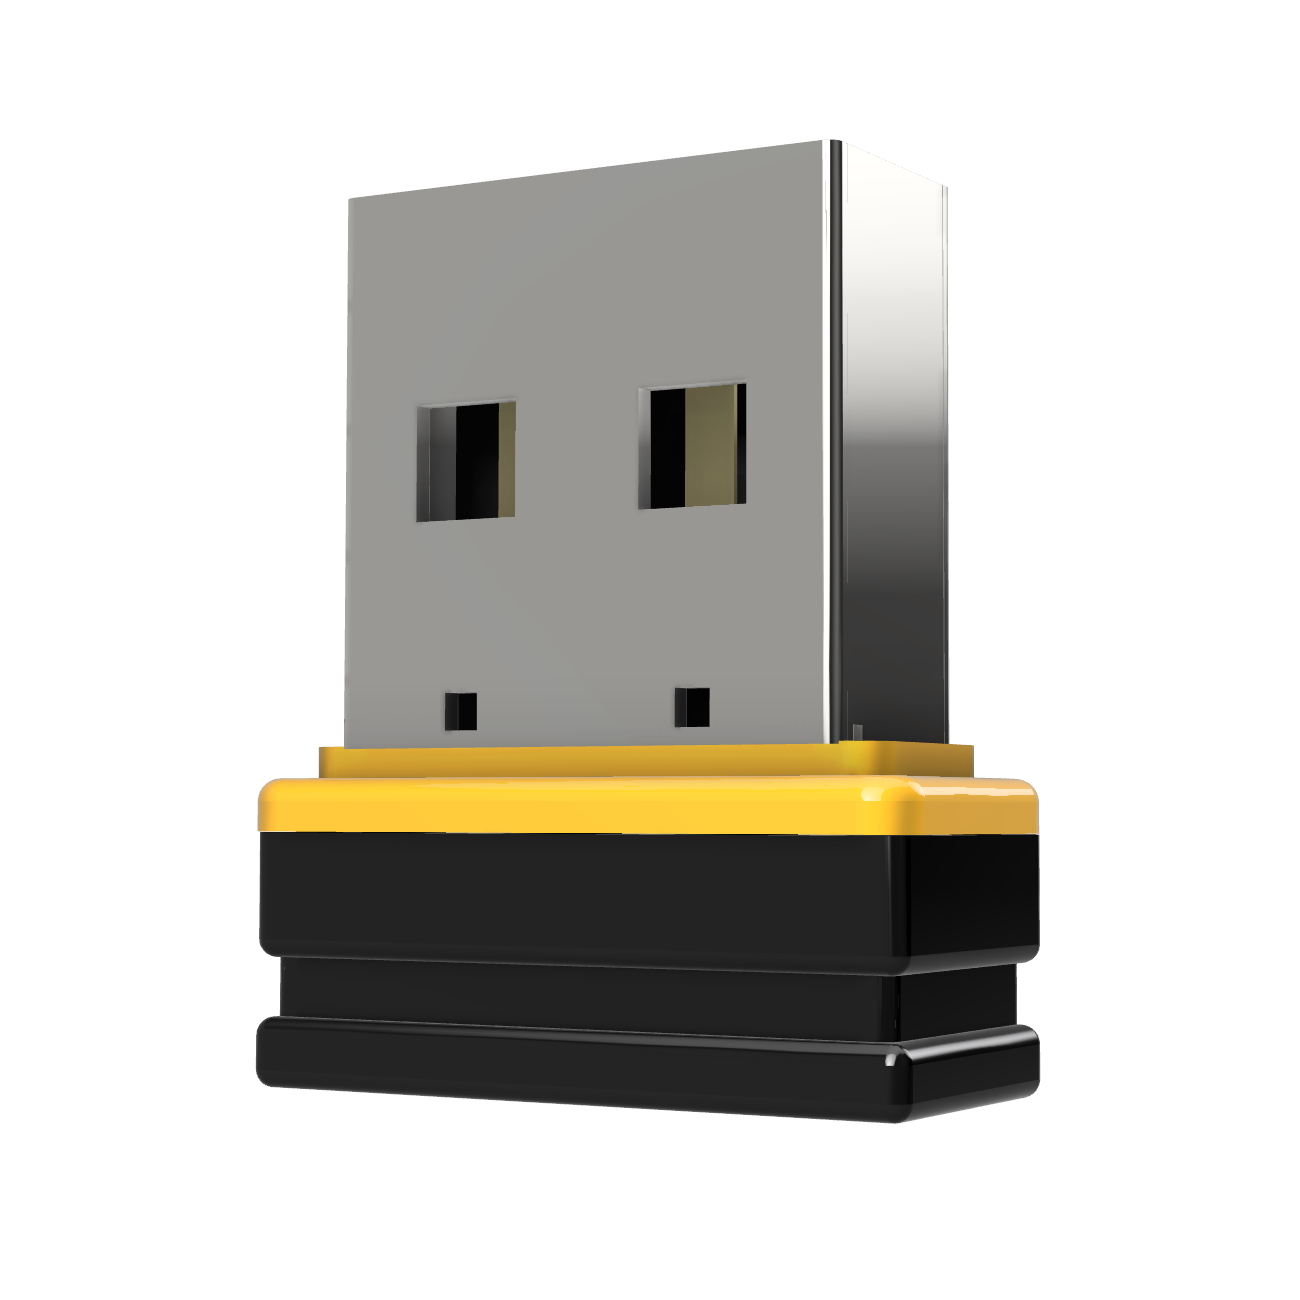 USB GERMANY ®ULTRA USB-Stick P1 (Schwarz/Gelb, Mini 8 GB)